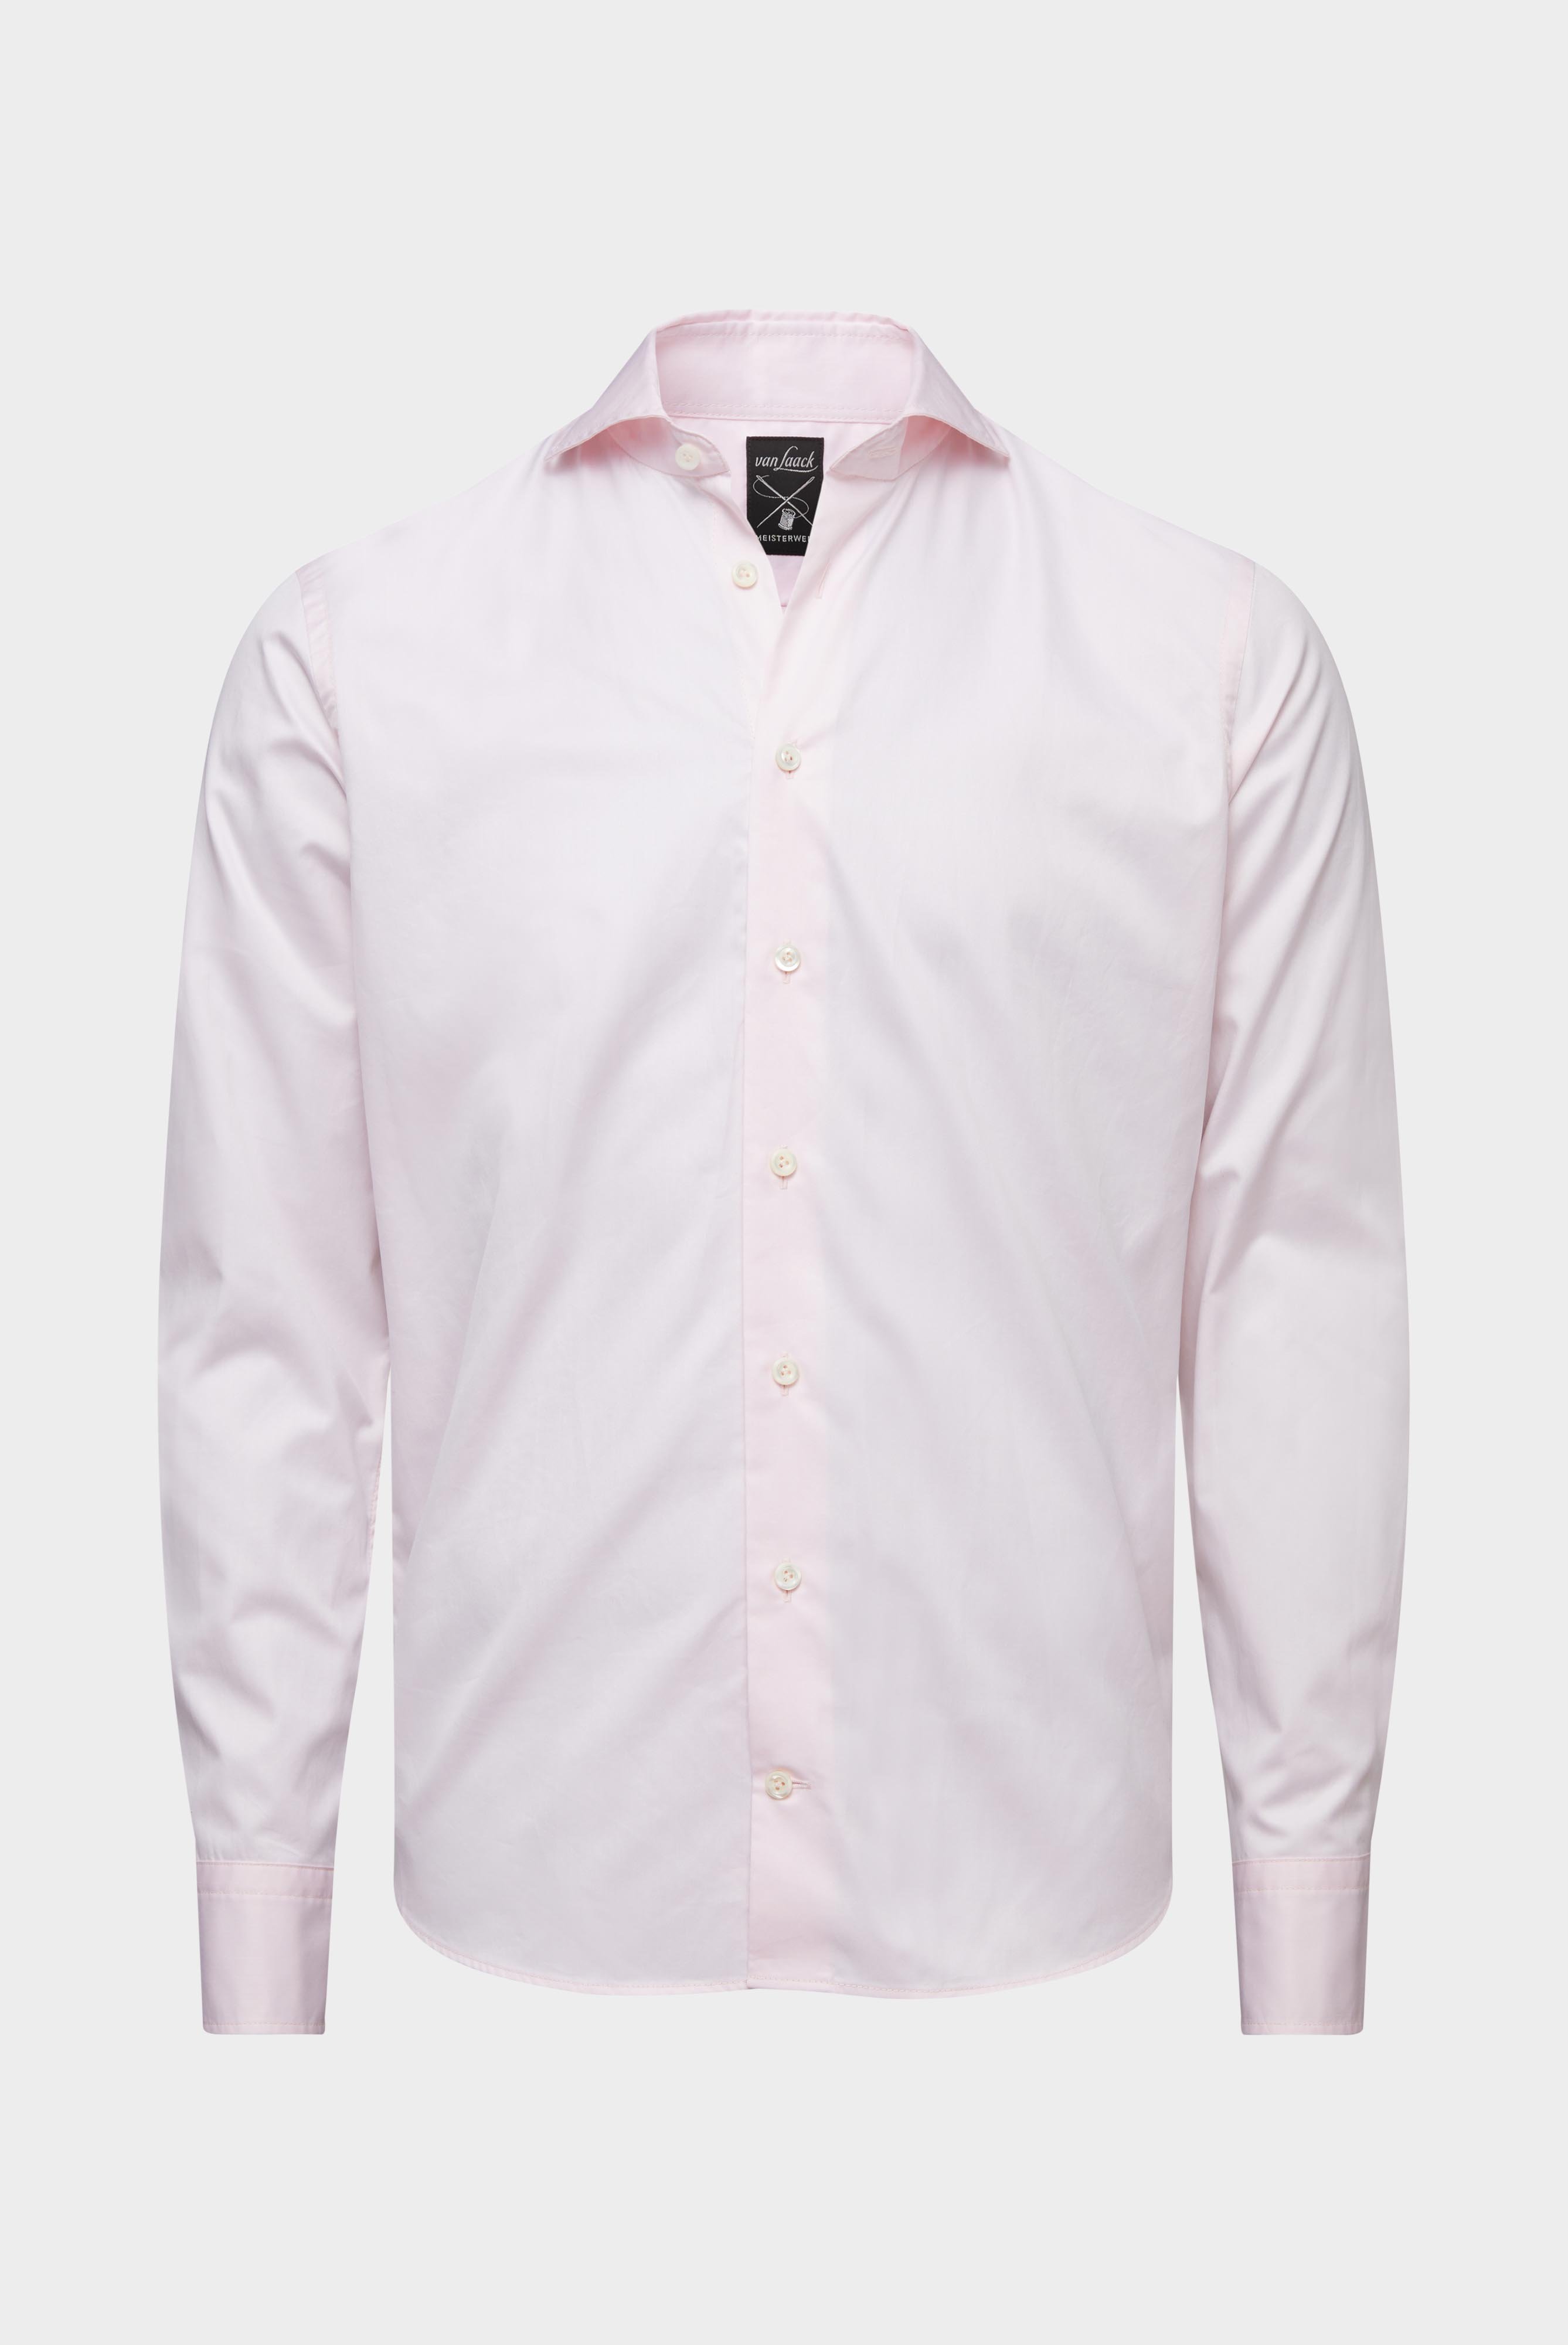 Business Hemden+Twill Hemd Slim Fit+20.2015.EB.160708.520.38